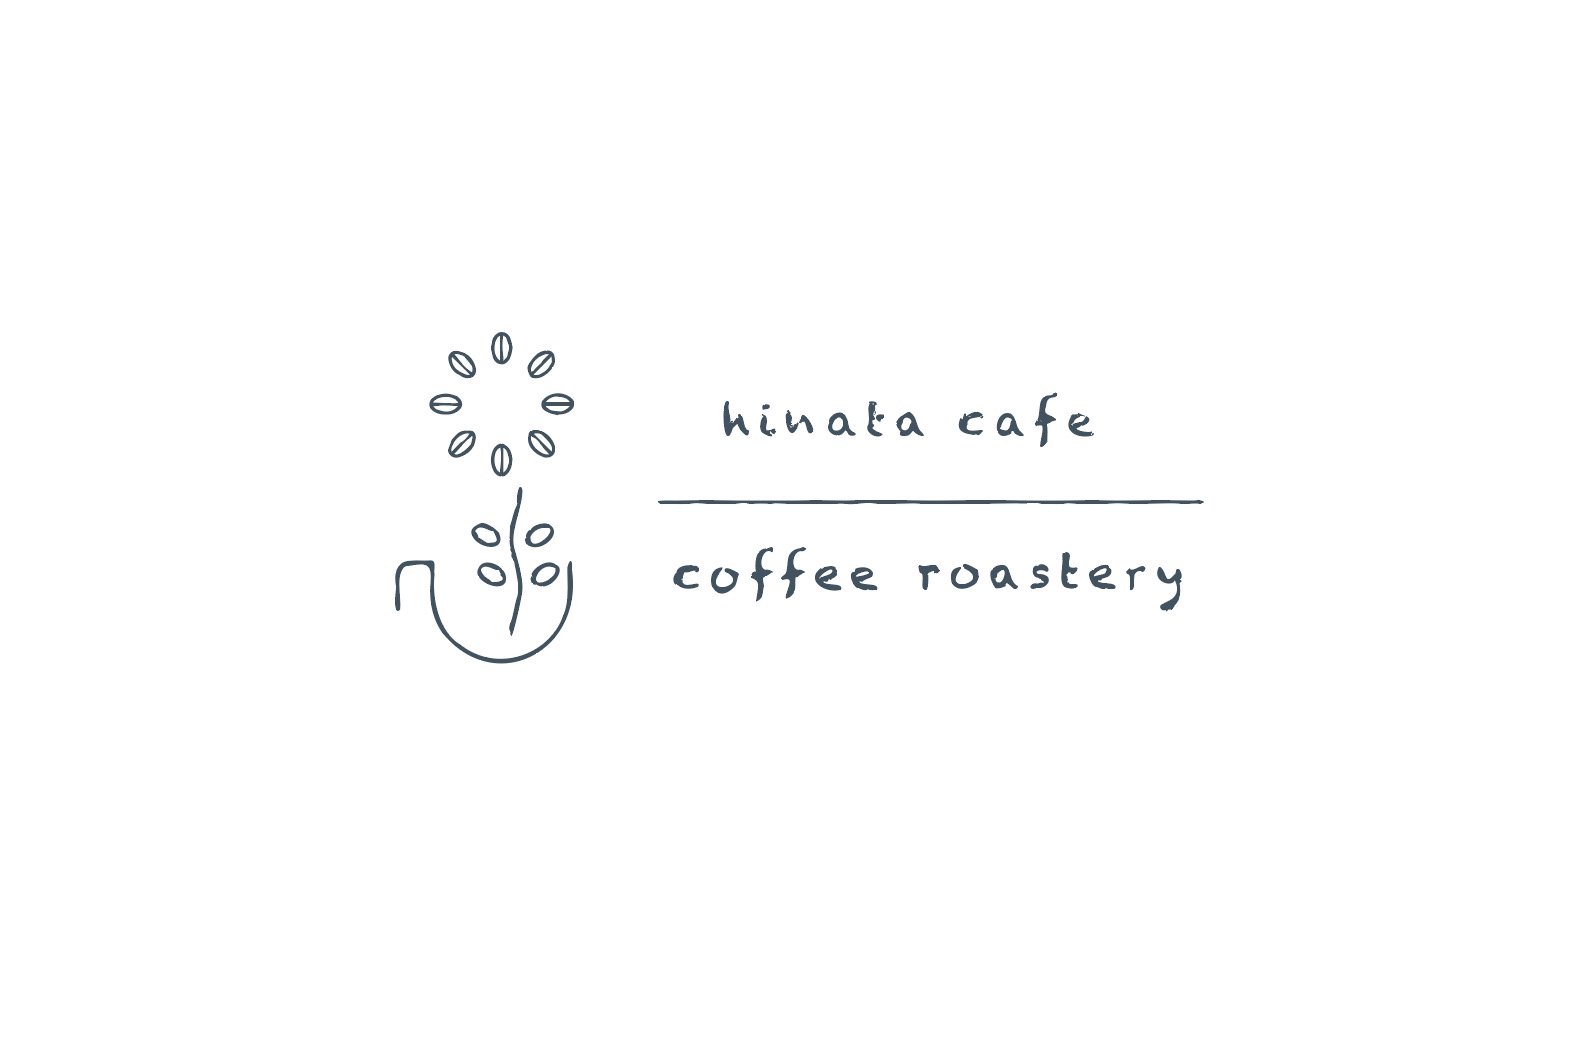 hinata cafe ~coffee roastery